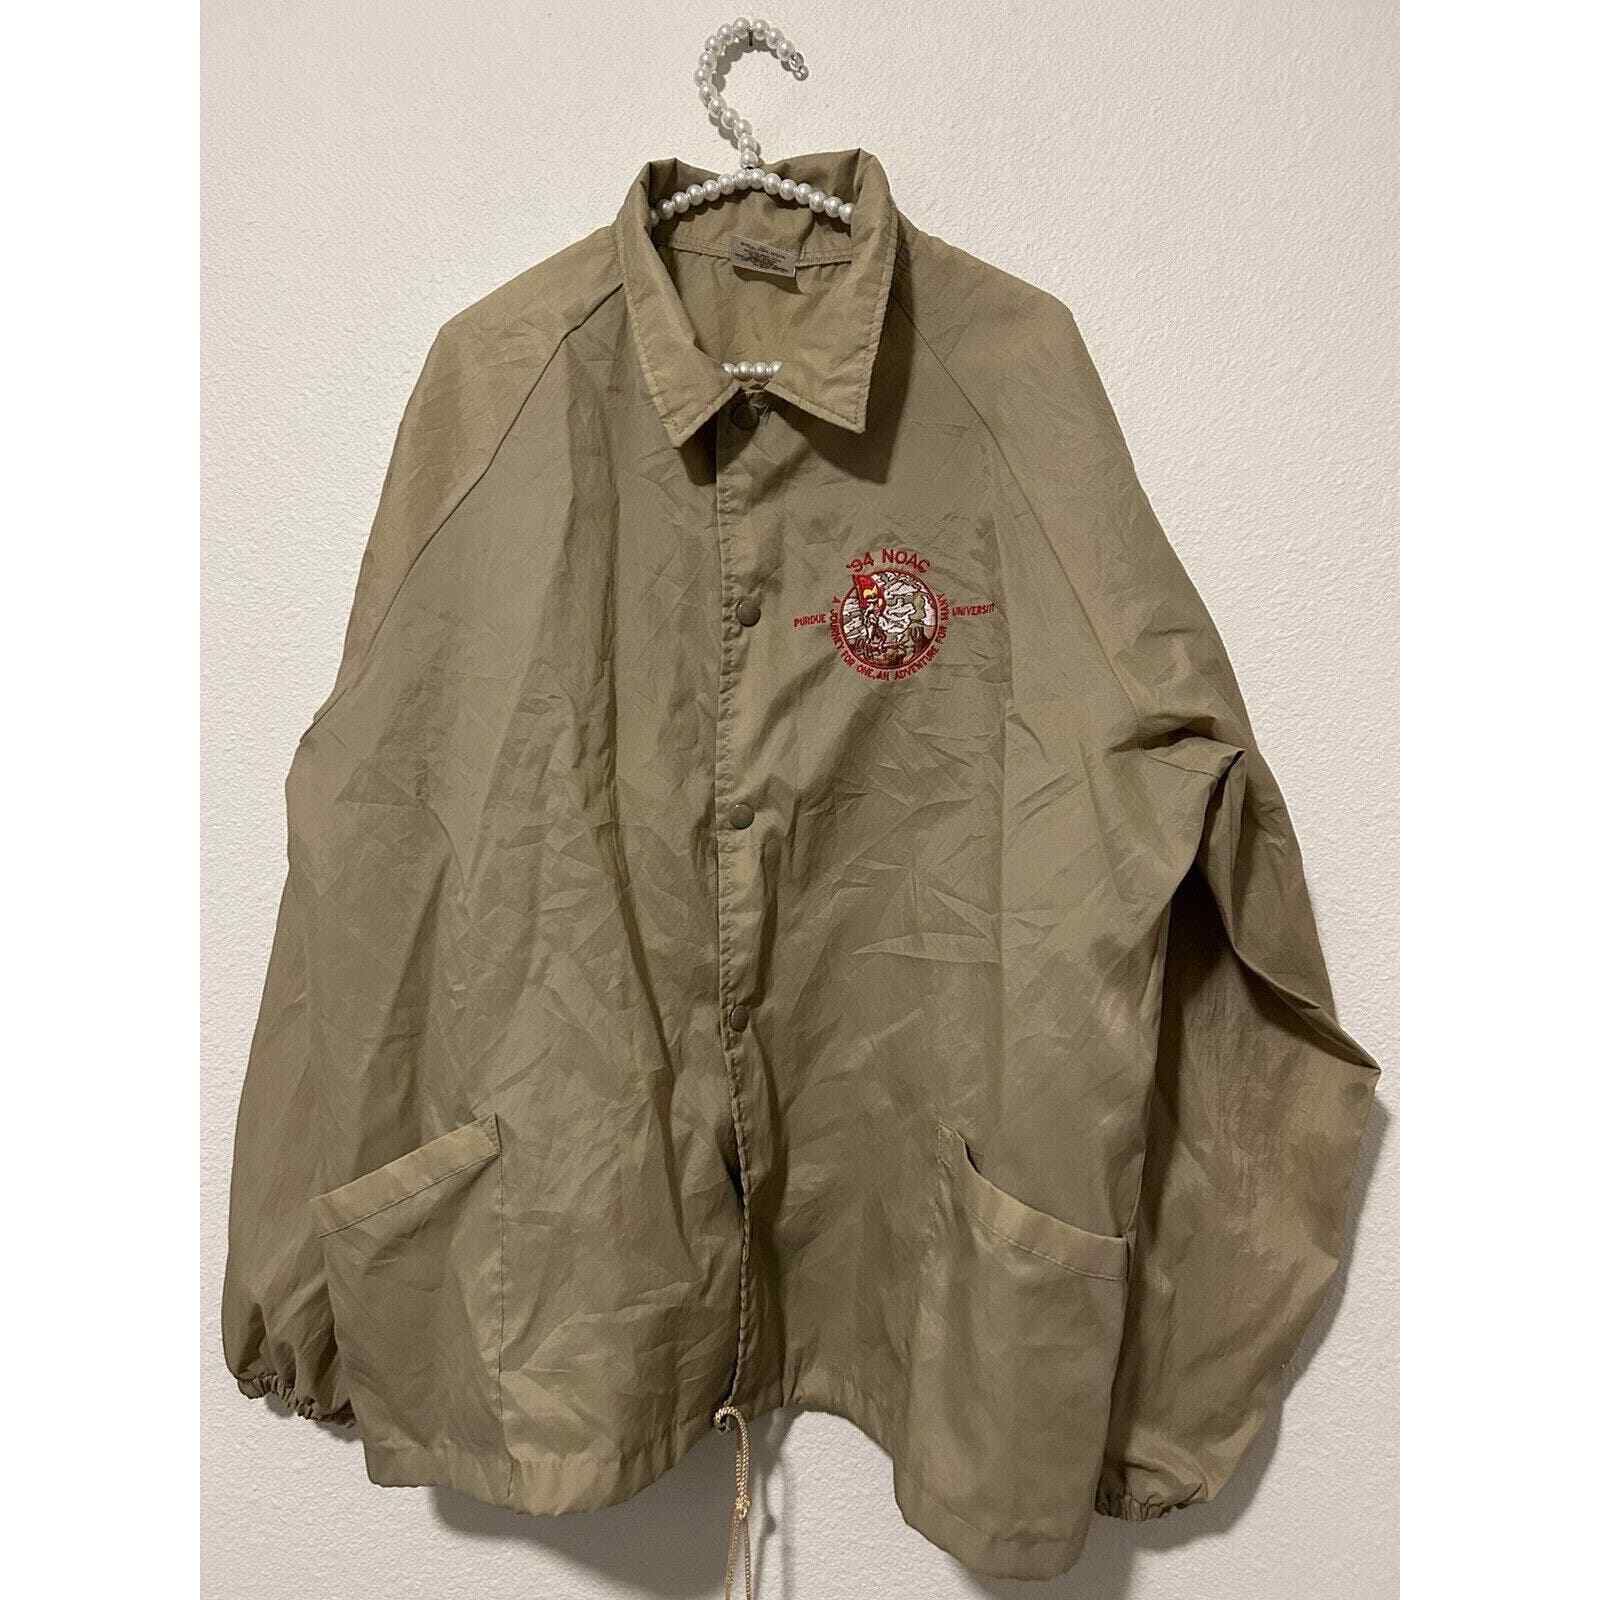 1994 Vintage NOAC Boy Scouts Of America Nylon Jacket Men’s Size XL Made In USA